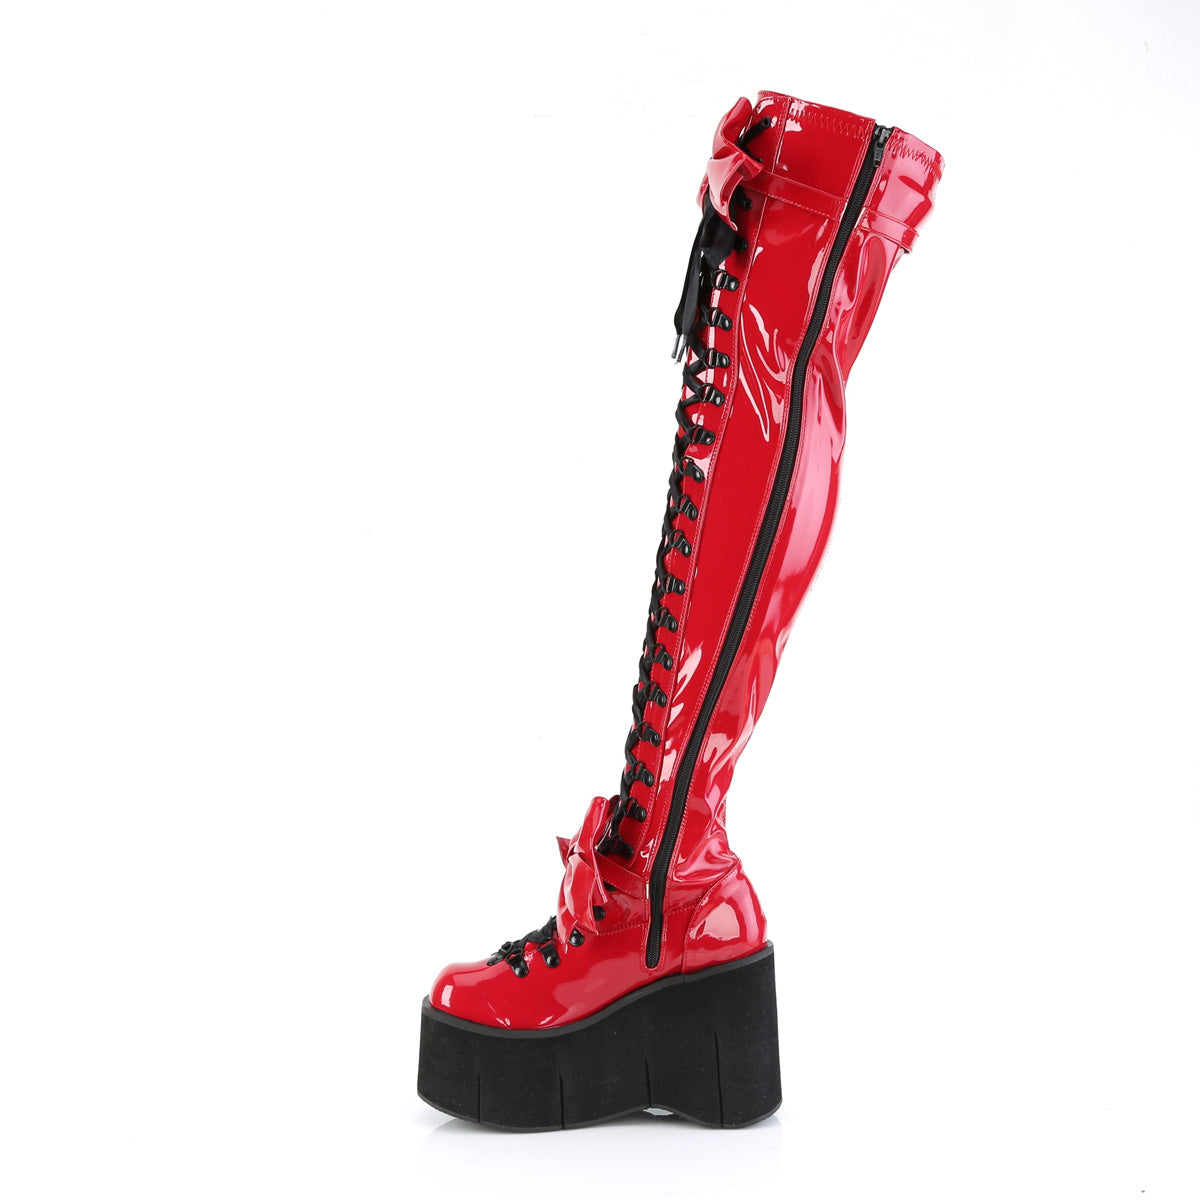 KERA-303 Demonia Red Patent Women's Over-the-Knee Boots [Demonia Cult Alternative Footwear]